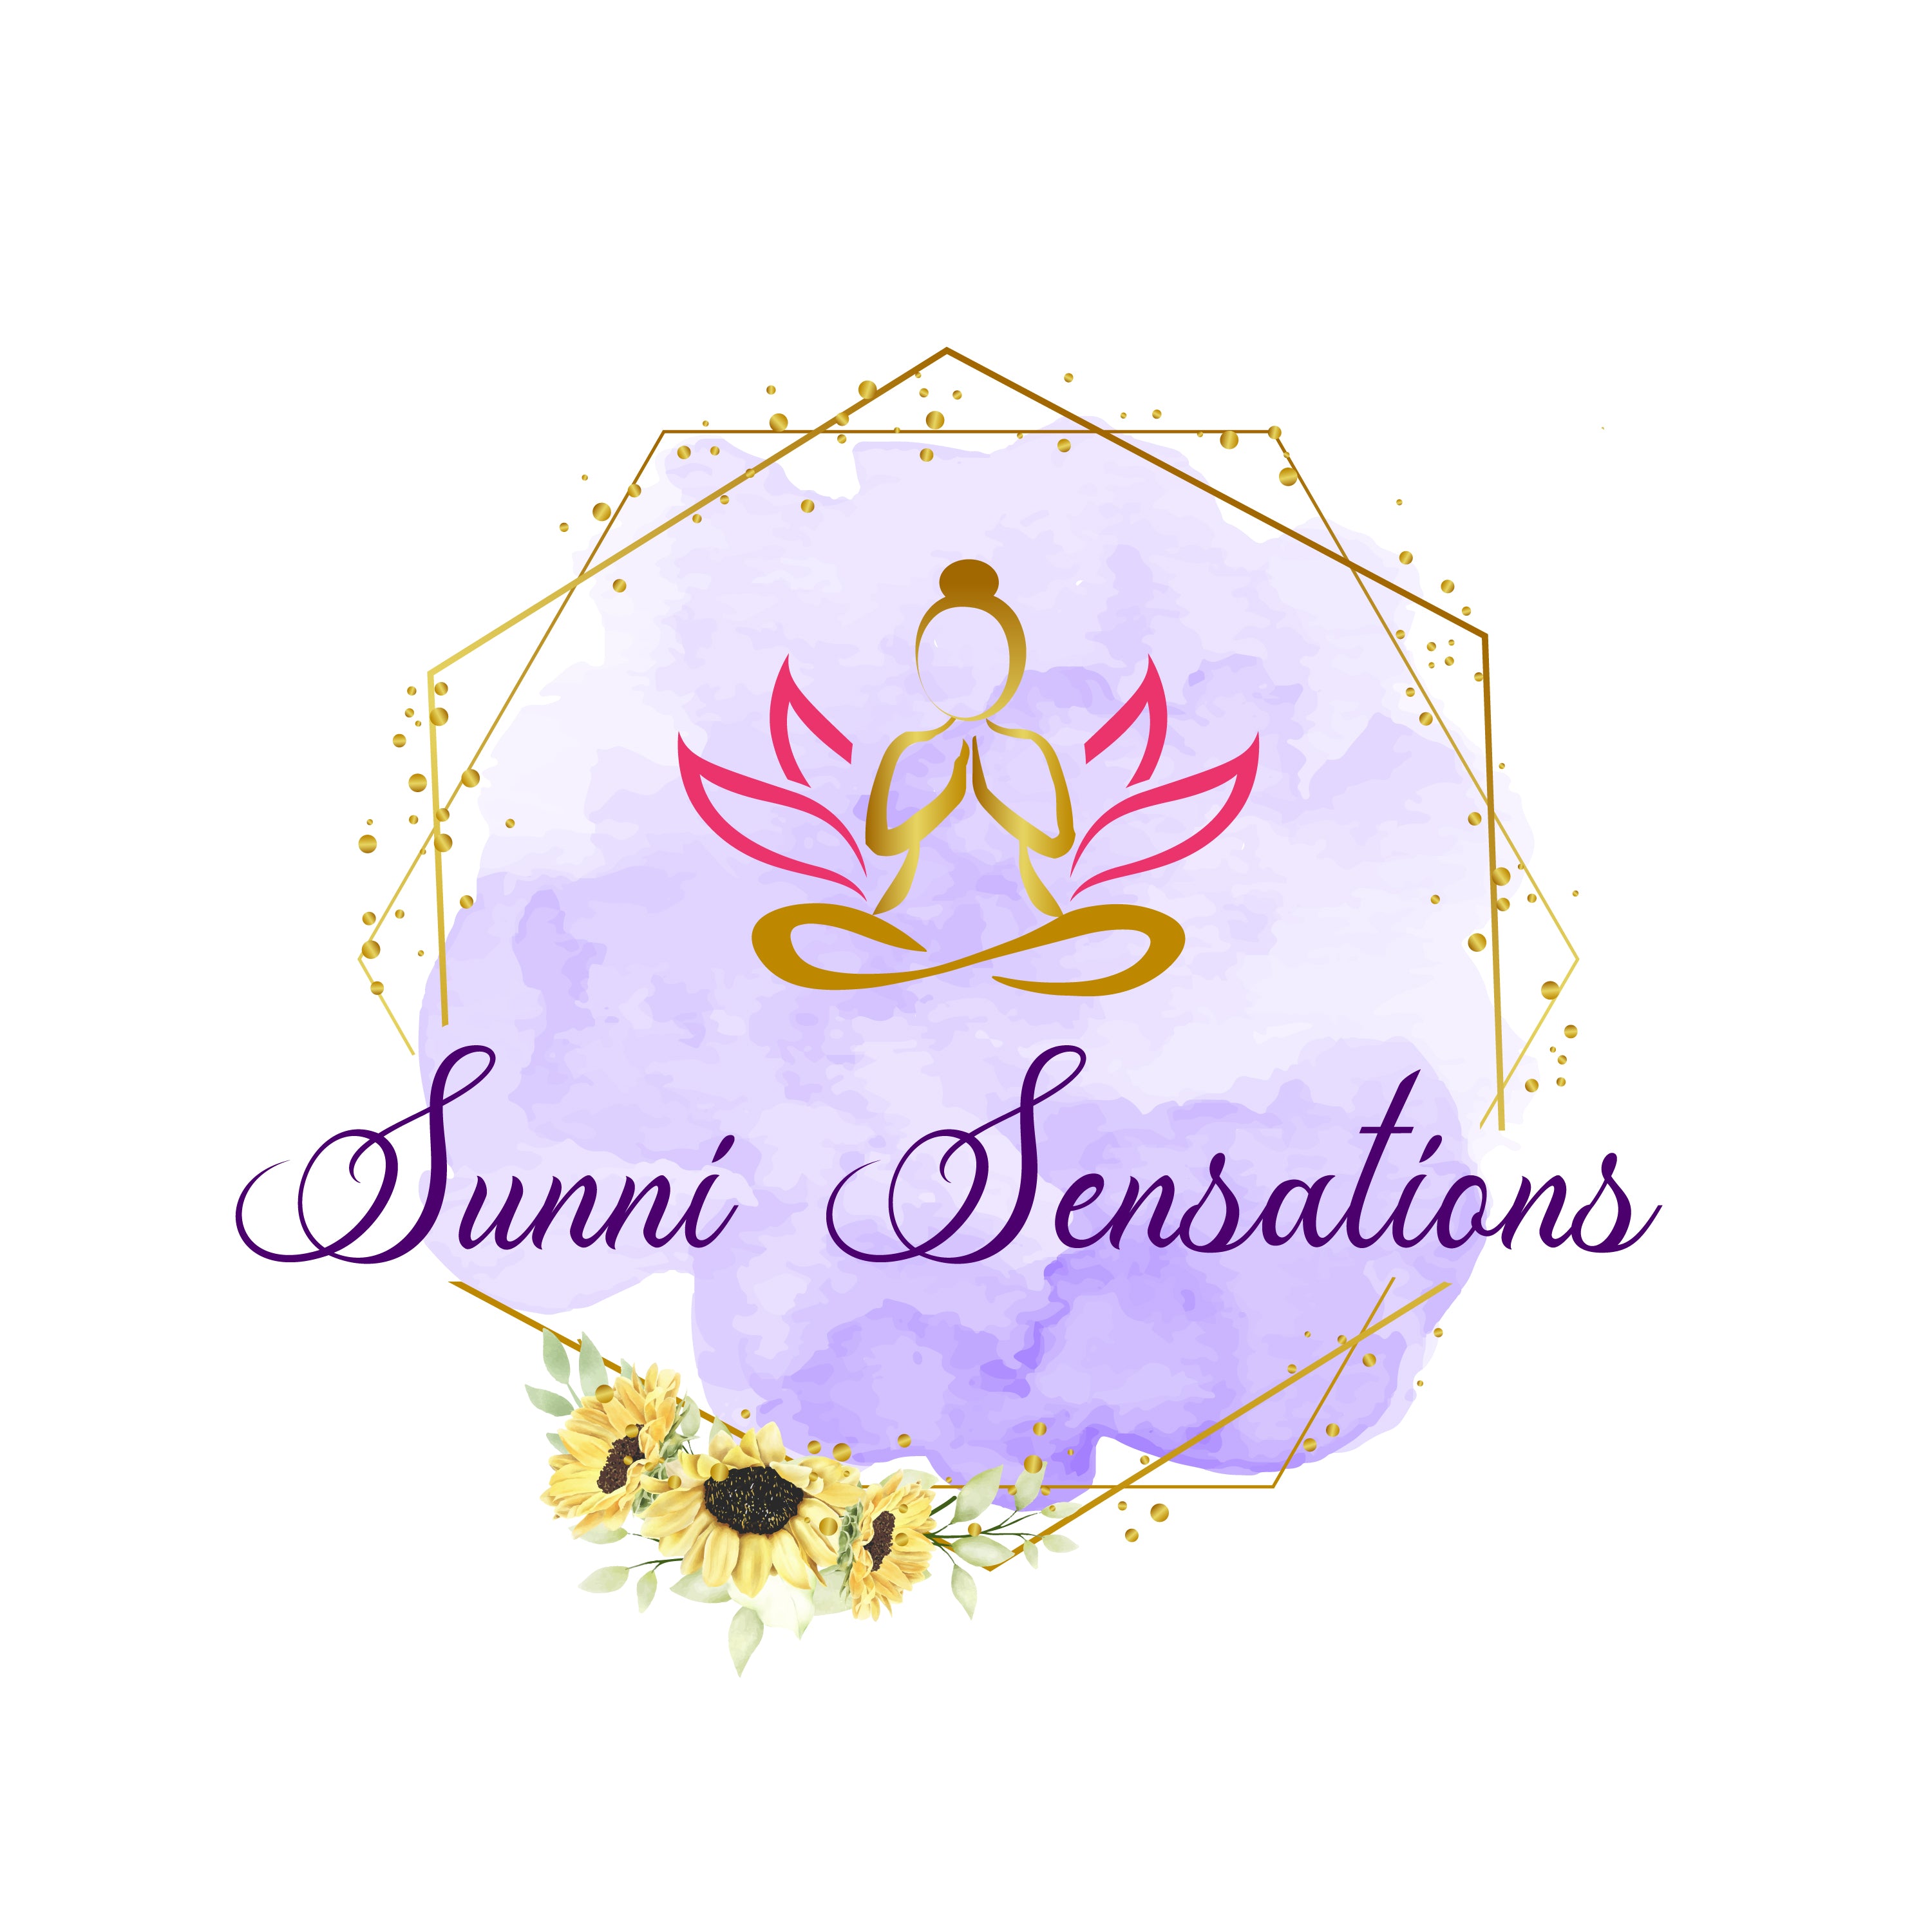 Sunni Sensations